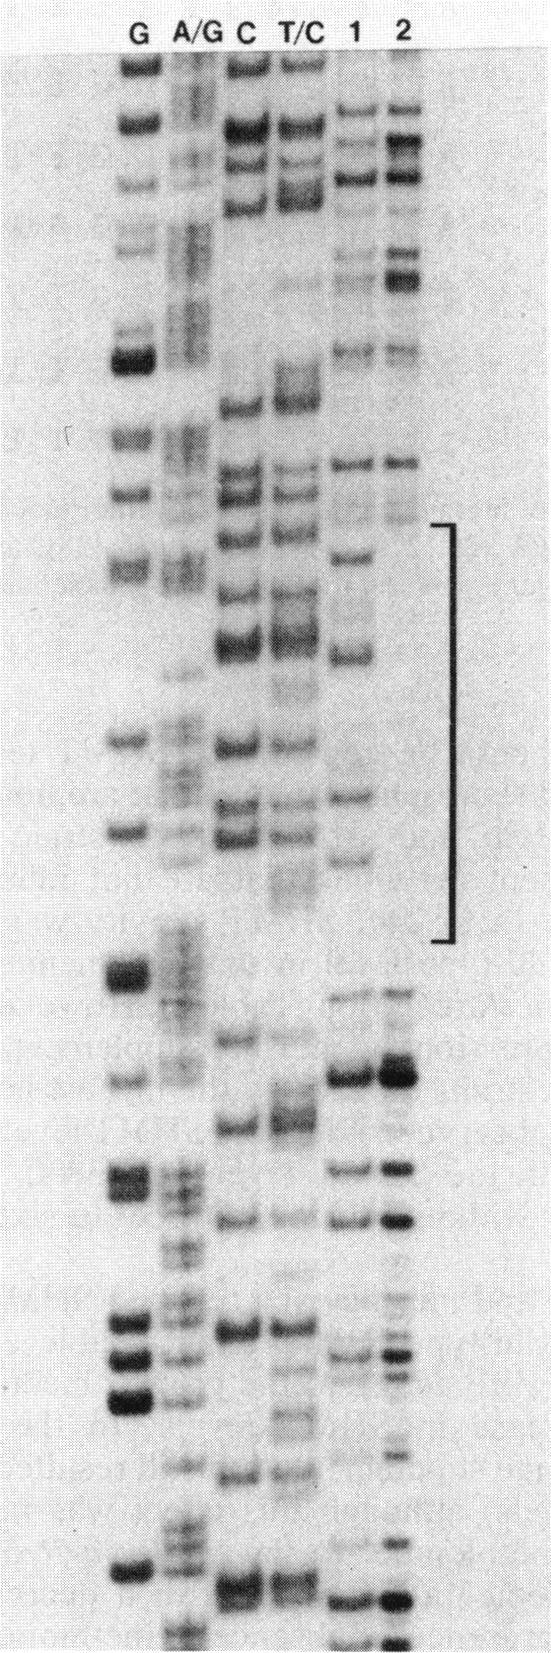 VOL. 172, 1990 1 2 3 4 5 6 7 8...m. FIG. 1. Gel retardation assay for binding of PurR protein to the glya control region.